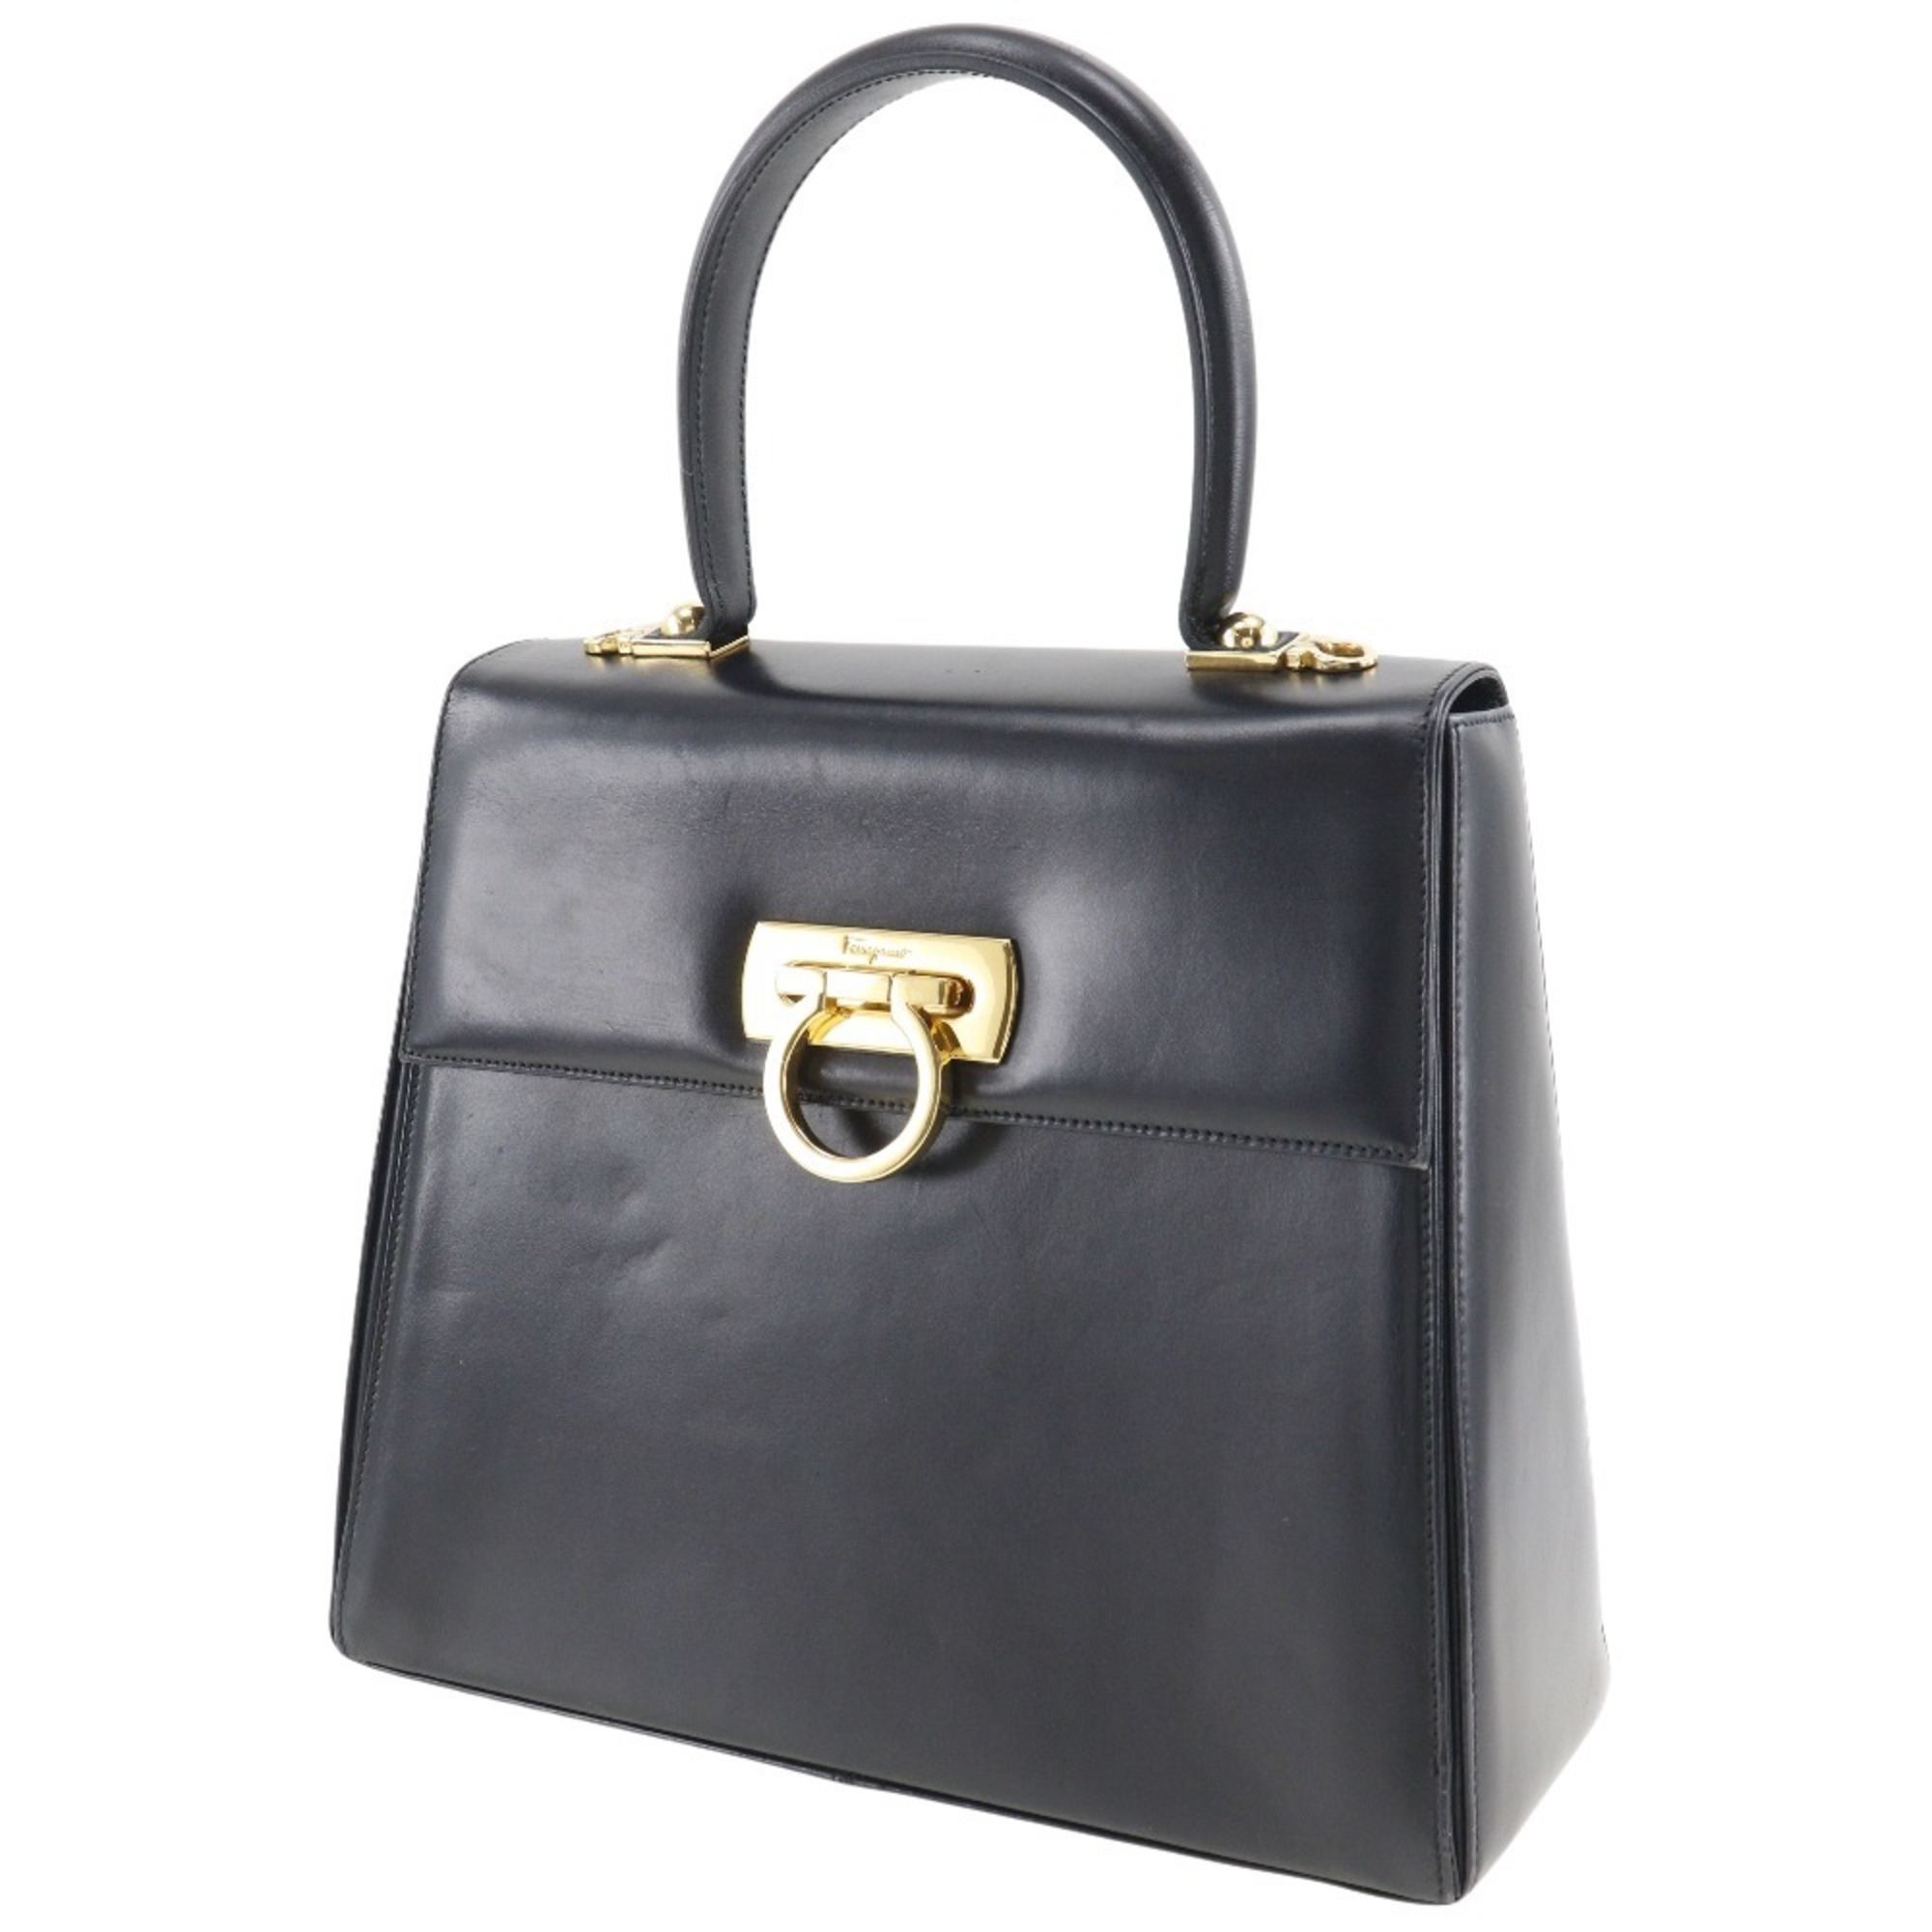 Salvatore Ferragamo Gancini handbag AT-21 0536 calfskin flap women's I131824020